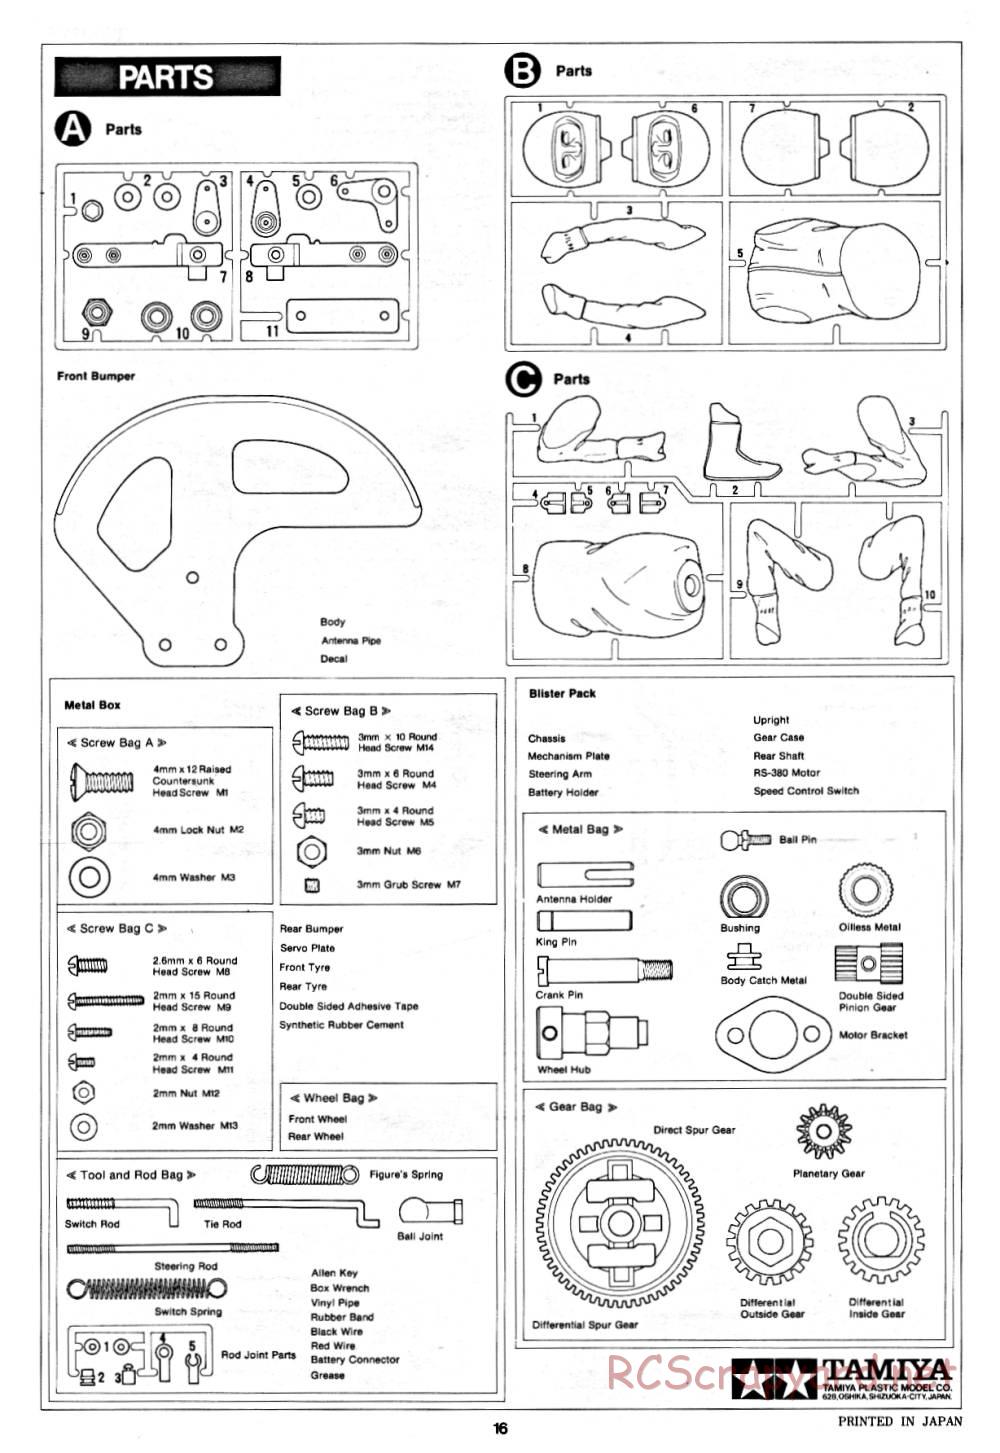 Tamiya - B2B Racing Sidecar - 58017 - Manual - Page 16